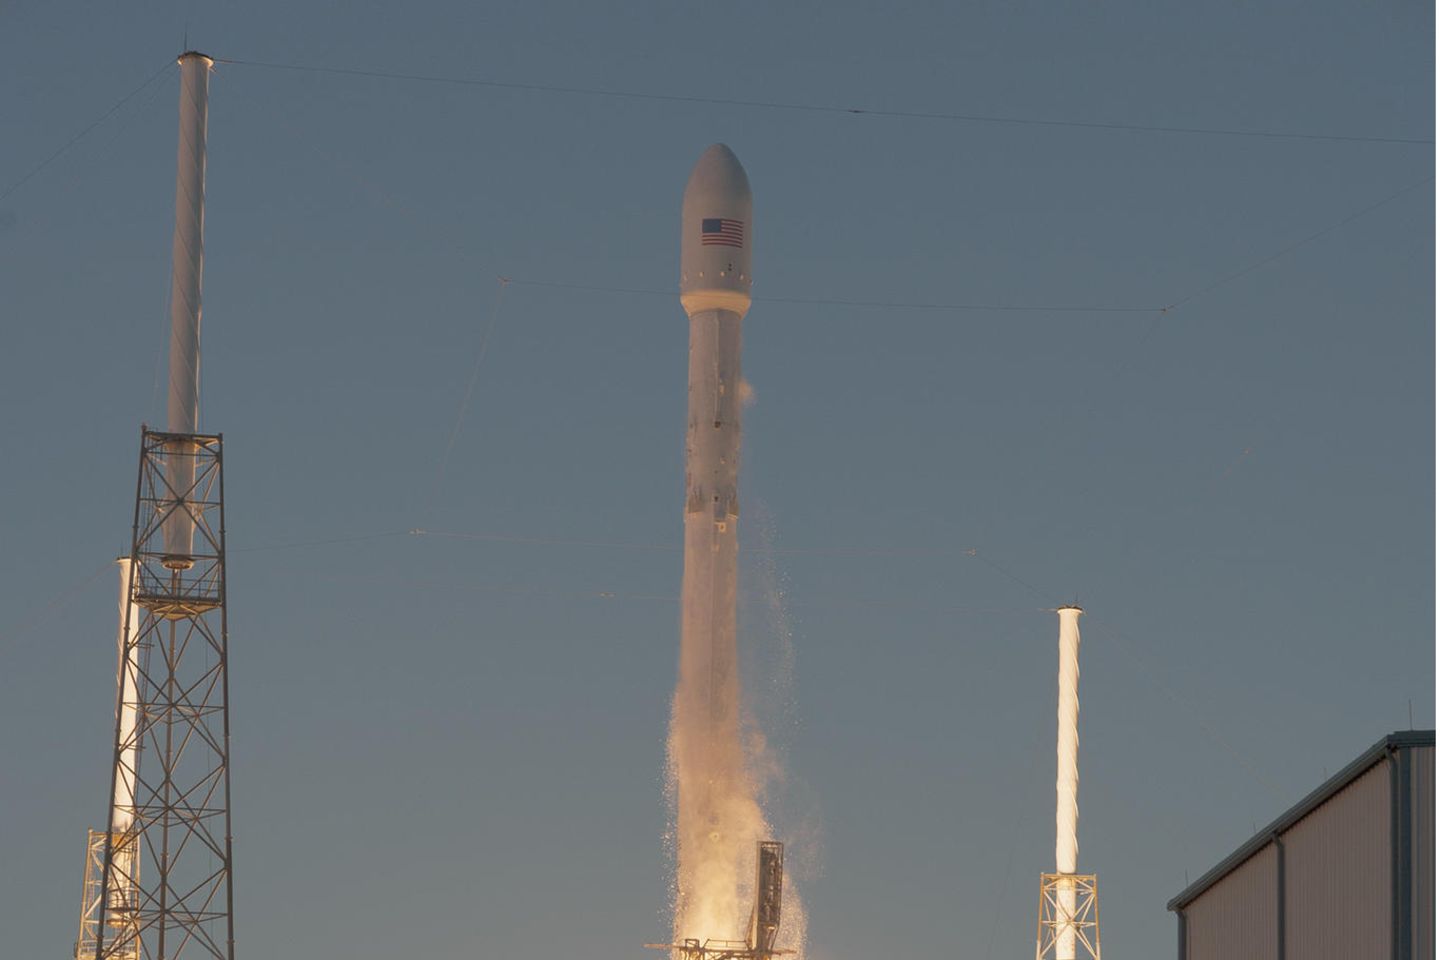 SpaceX Falcon 9 Rakete